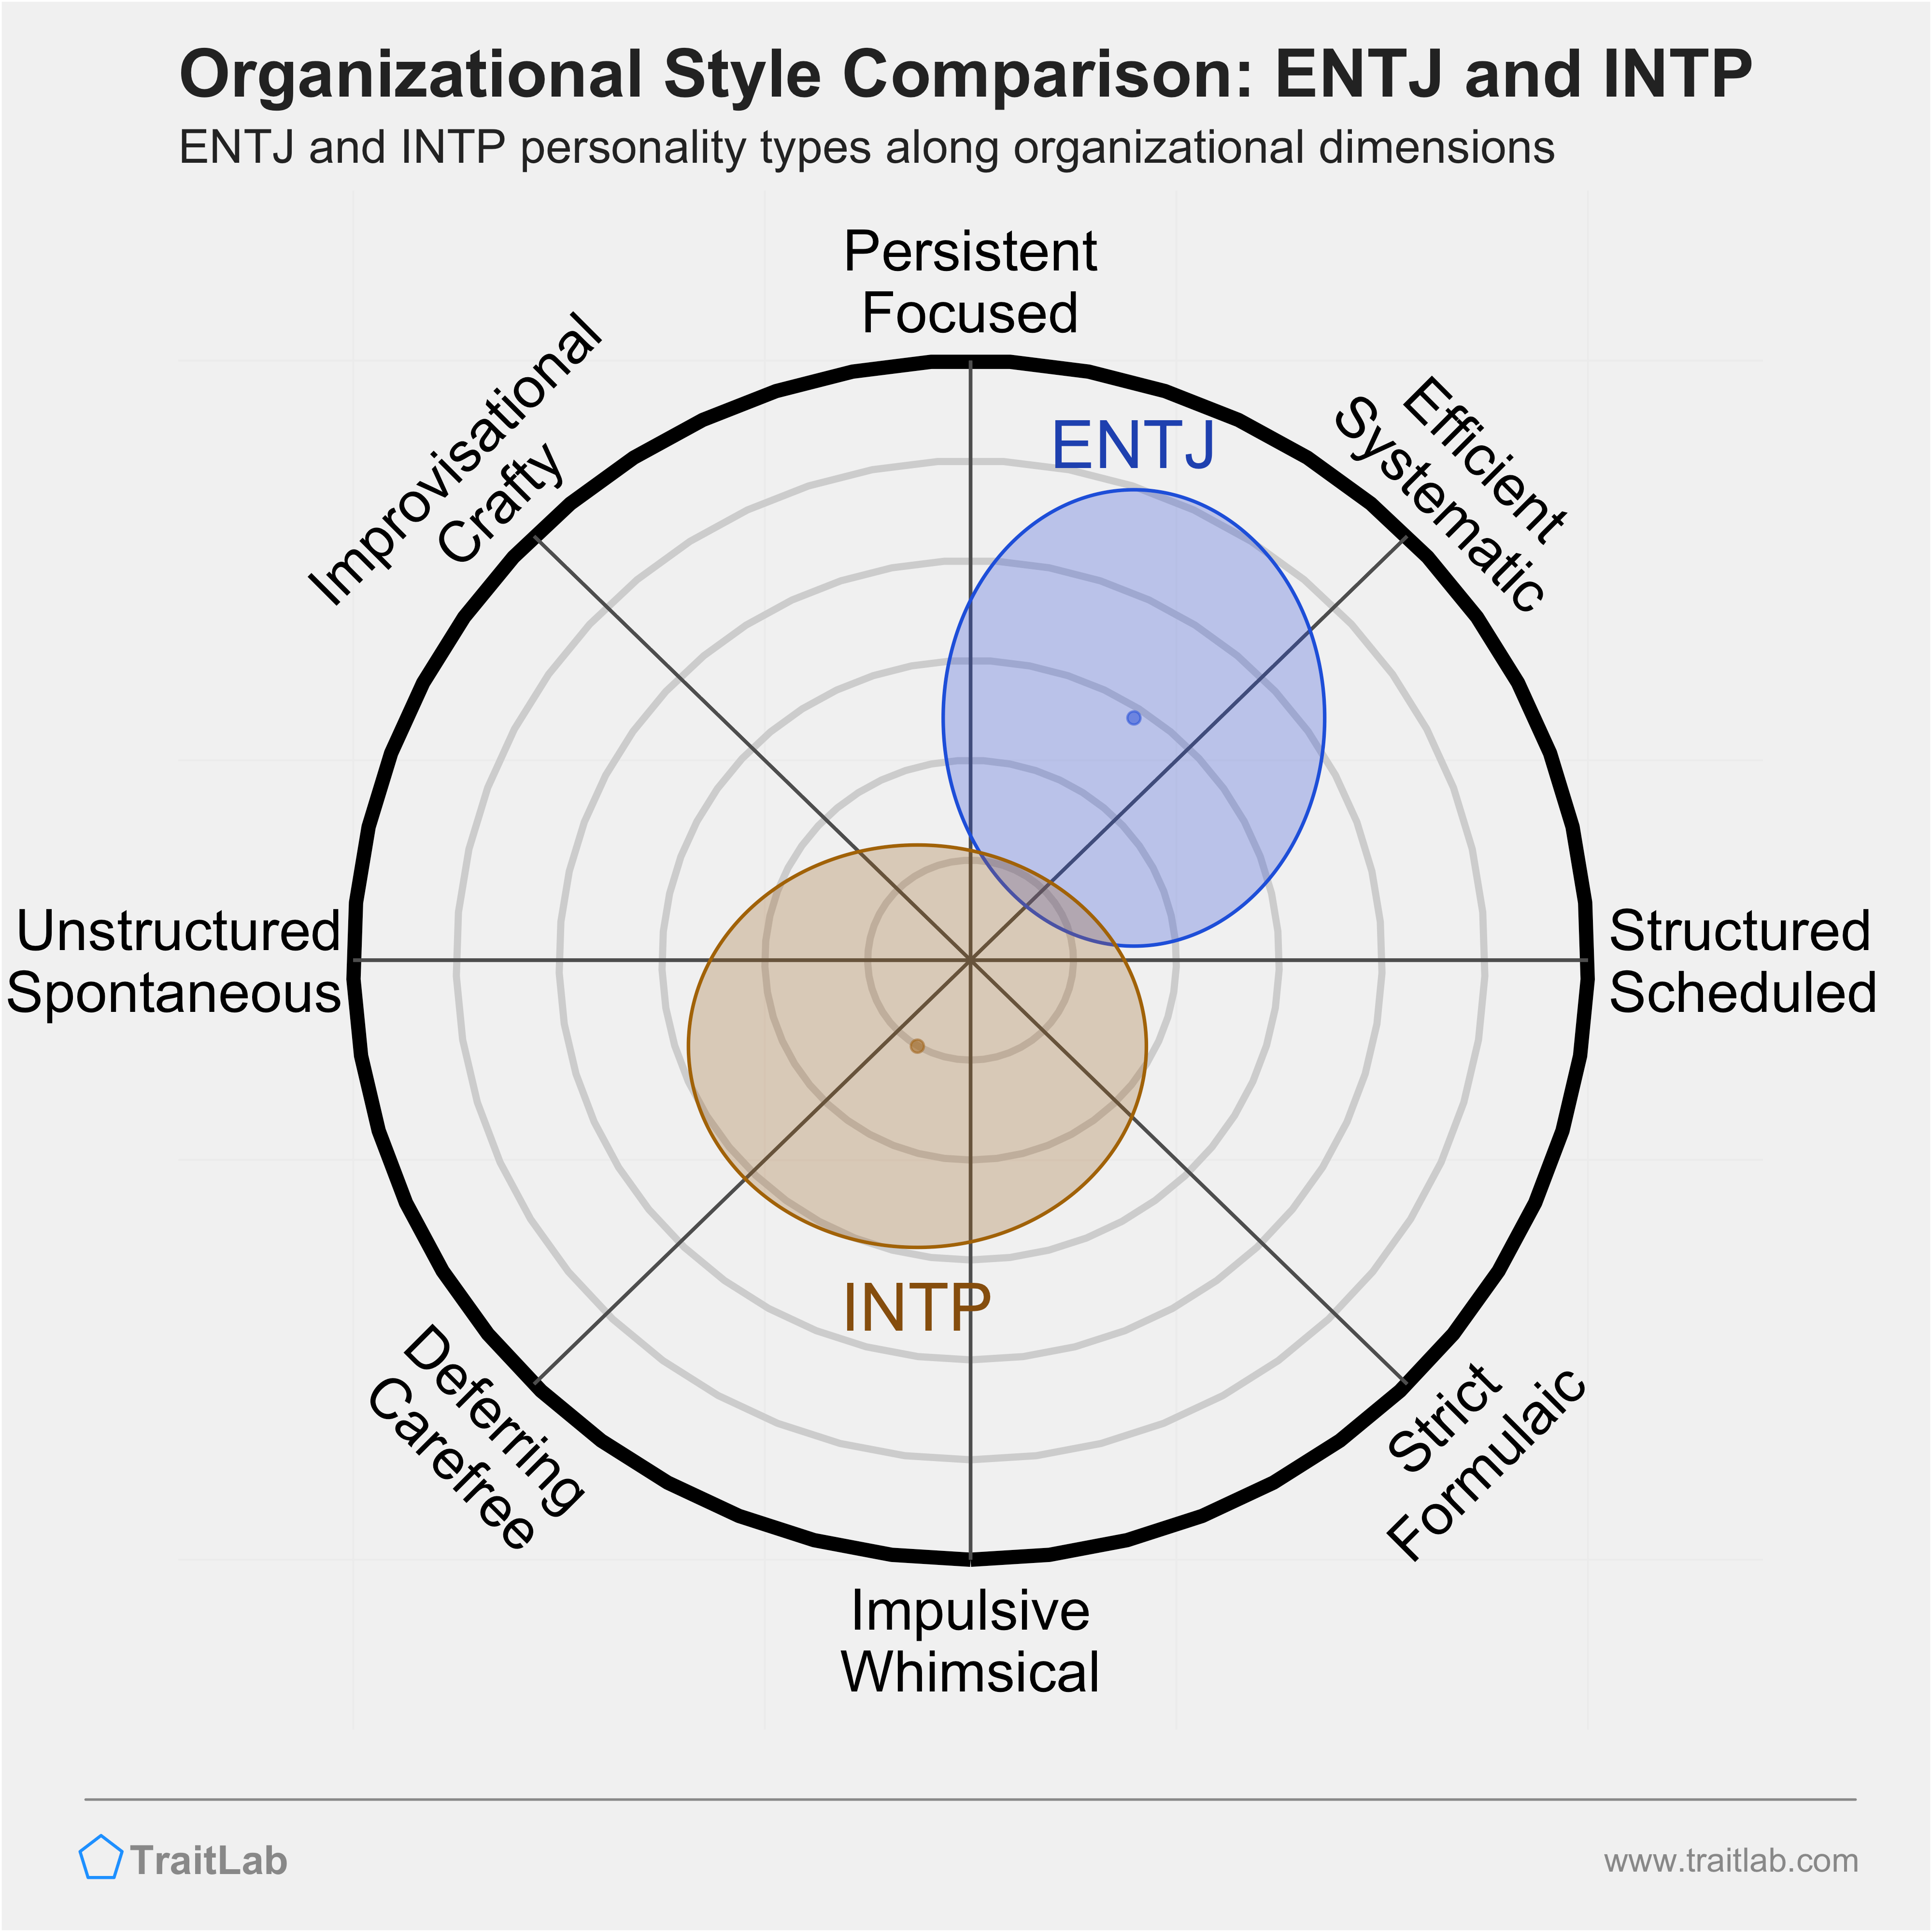 ENTJ and INTP comparison across organizational dimensions